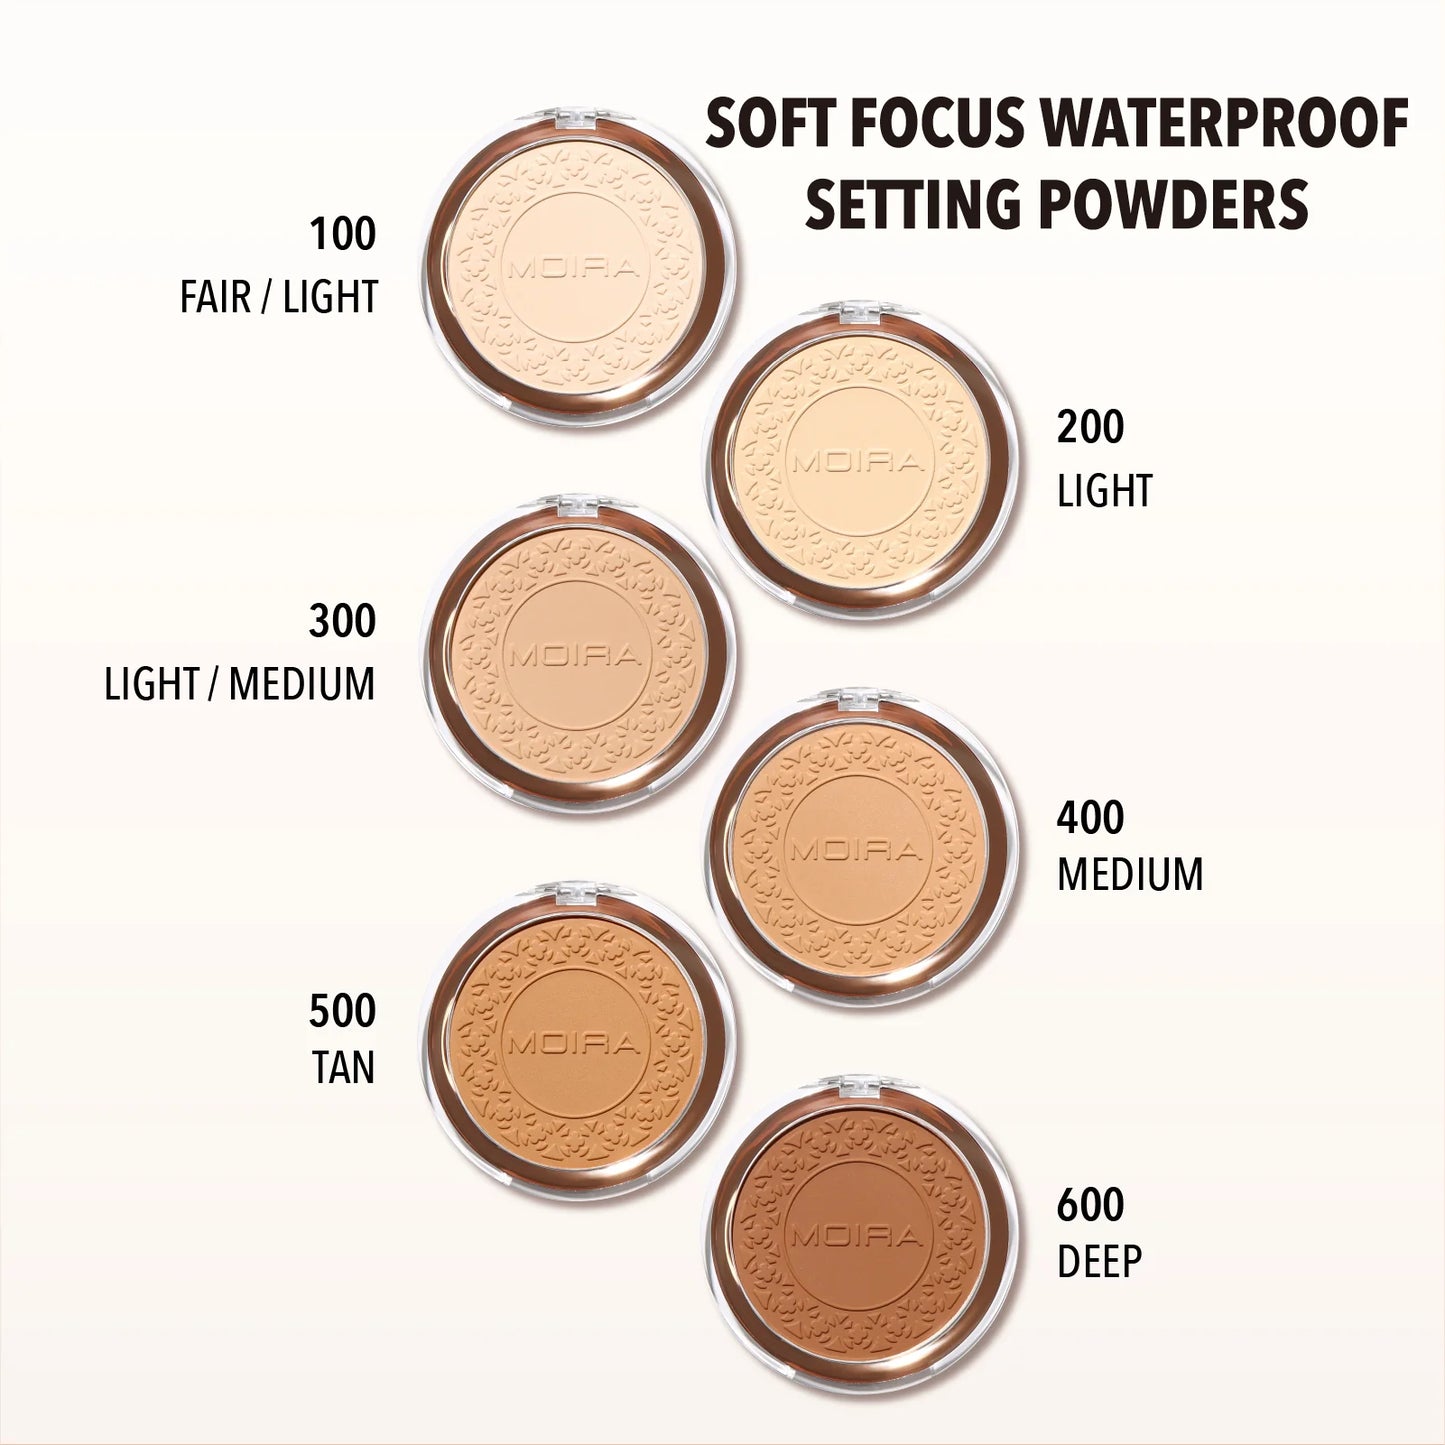 SWP 200 Light - Soft Focus Waterproof Setting Powder